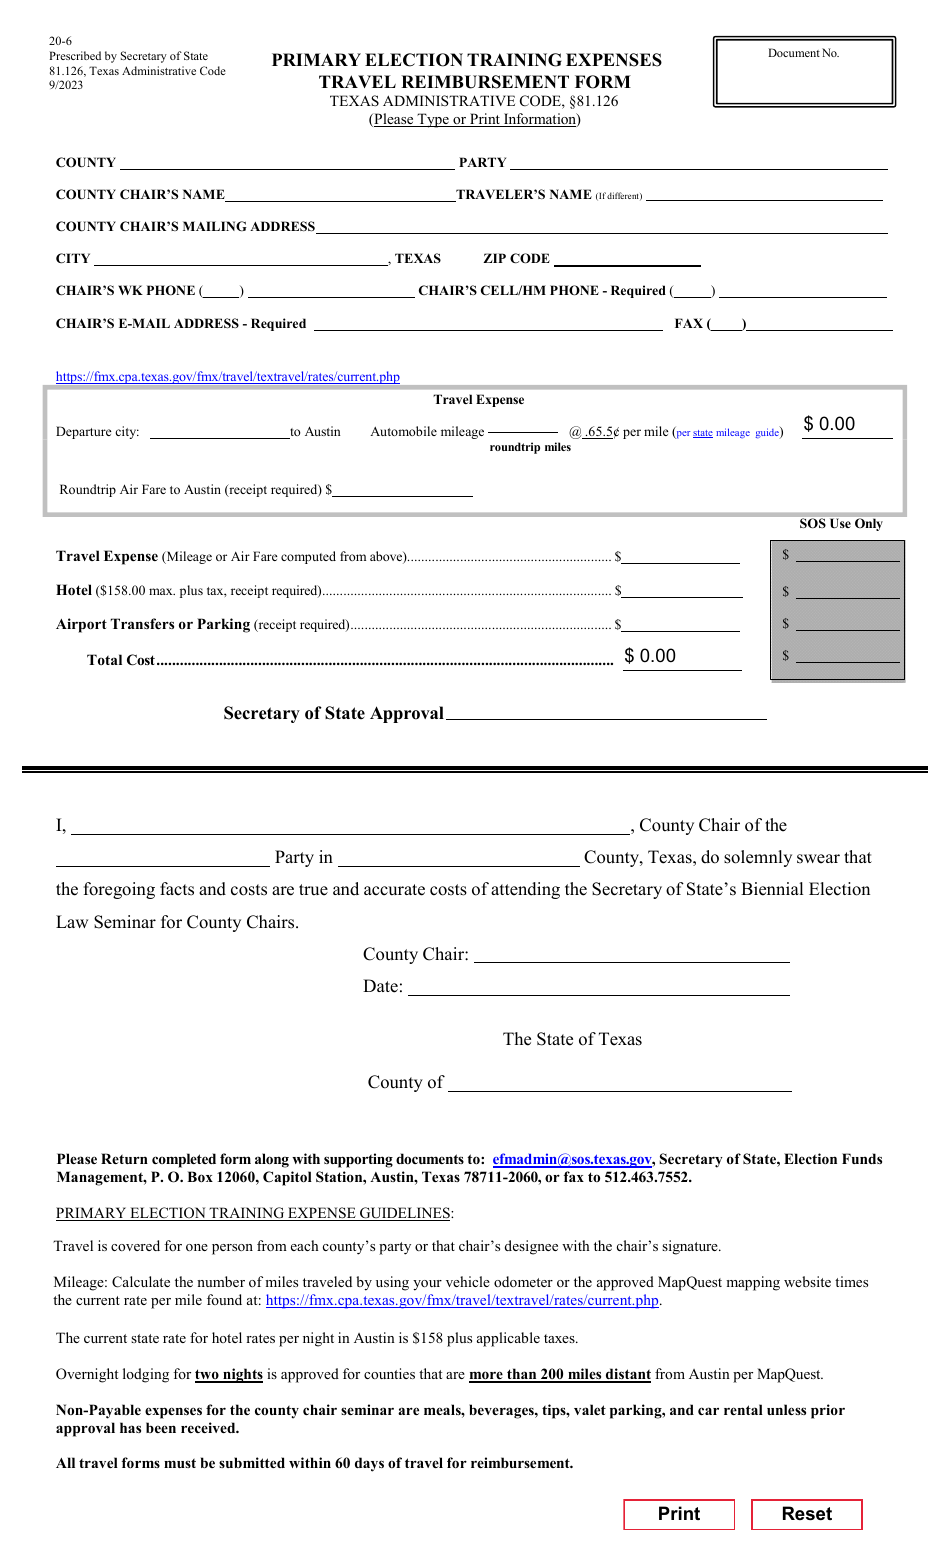 Form 20-6 Primary Election Training Expenses Travel Reimbursement Form - Texas, Page 1